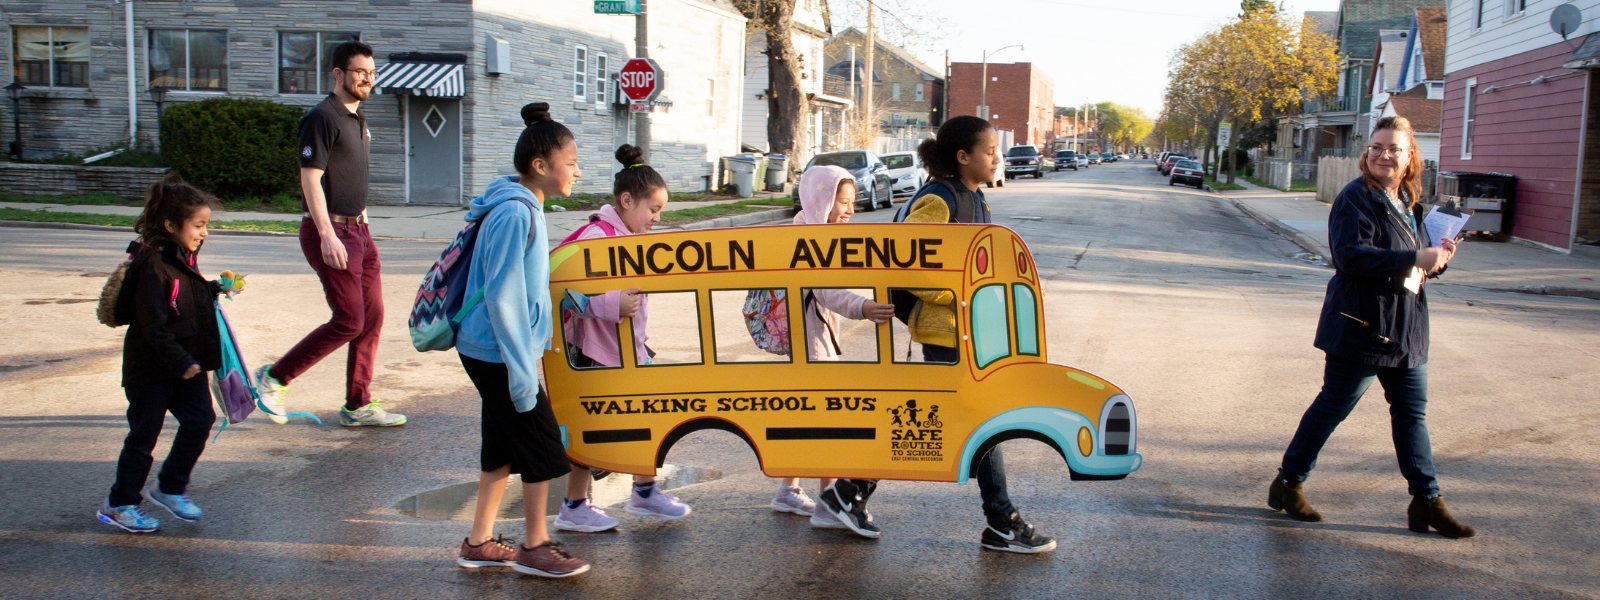 Kids crossing street with cutout school bus